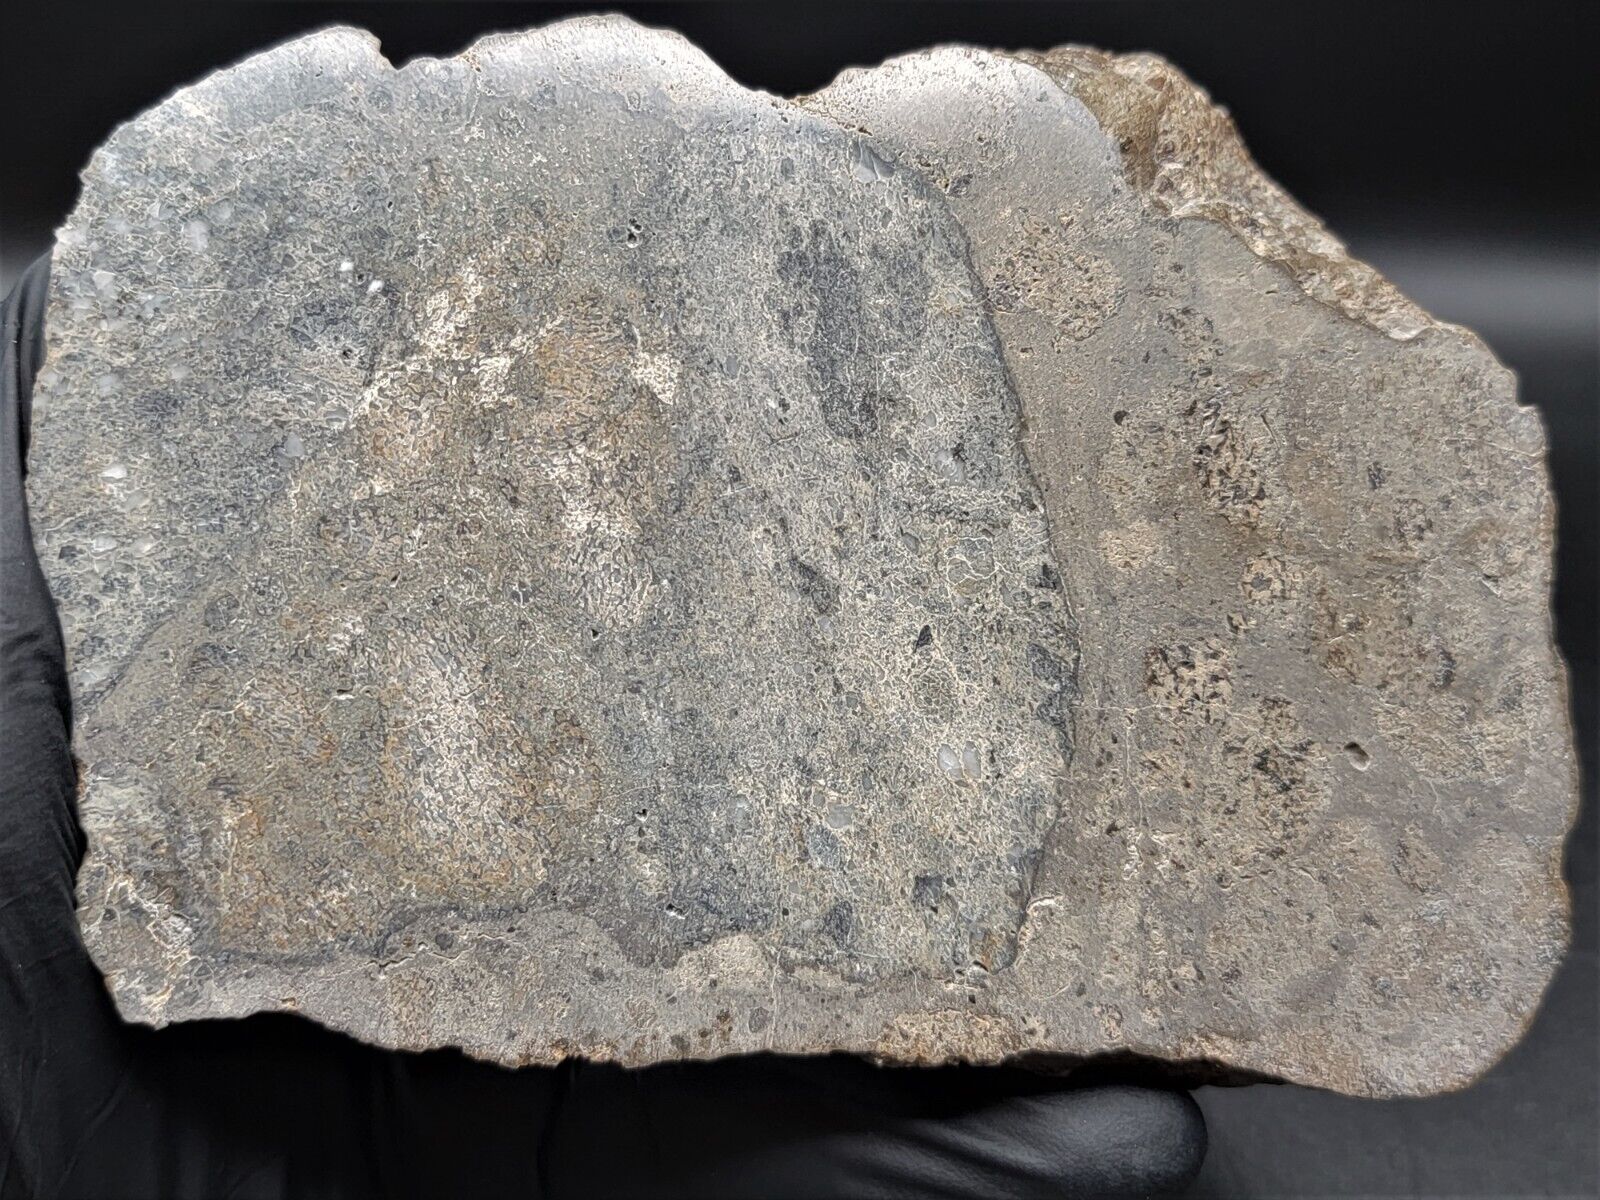 JIKHARRA 001 (382g) Polished Meteorite End Cut Eucrite Melt Breccia IMCA SELLERS